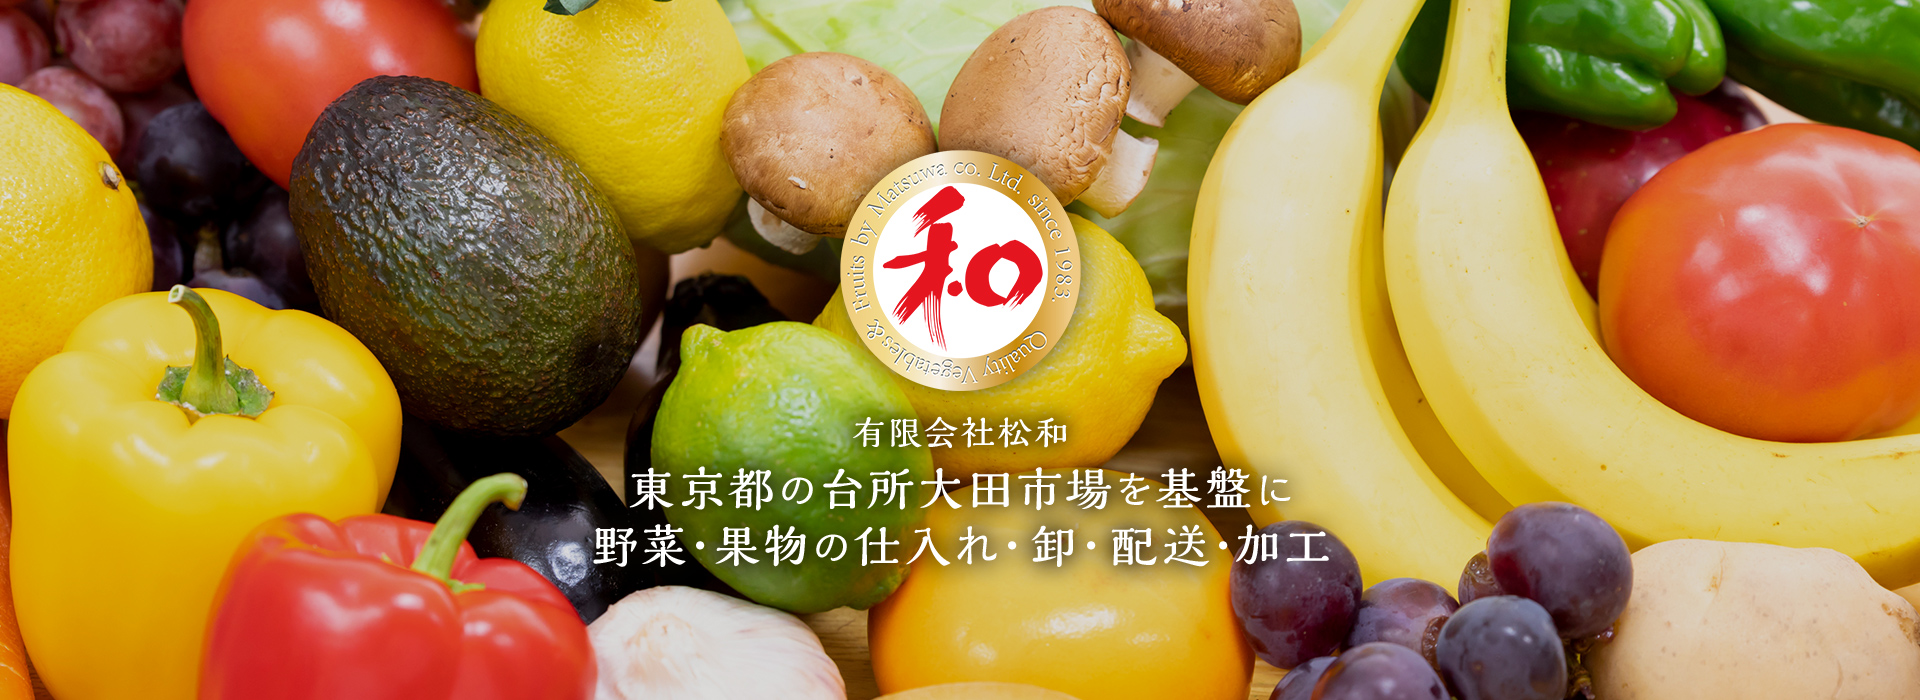 株式会社松和 東京都の台所大田市場を基盤に野菜・果物の仕入れ・卸・配送・加工